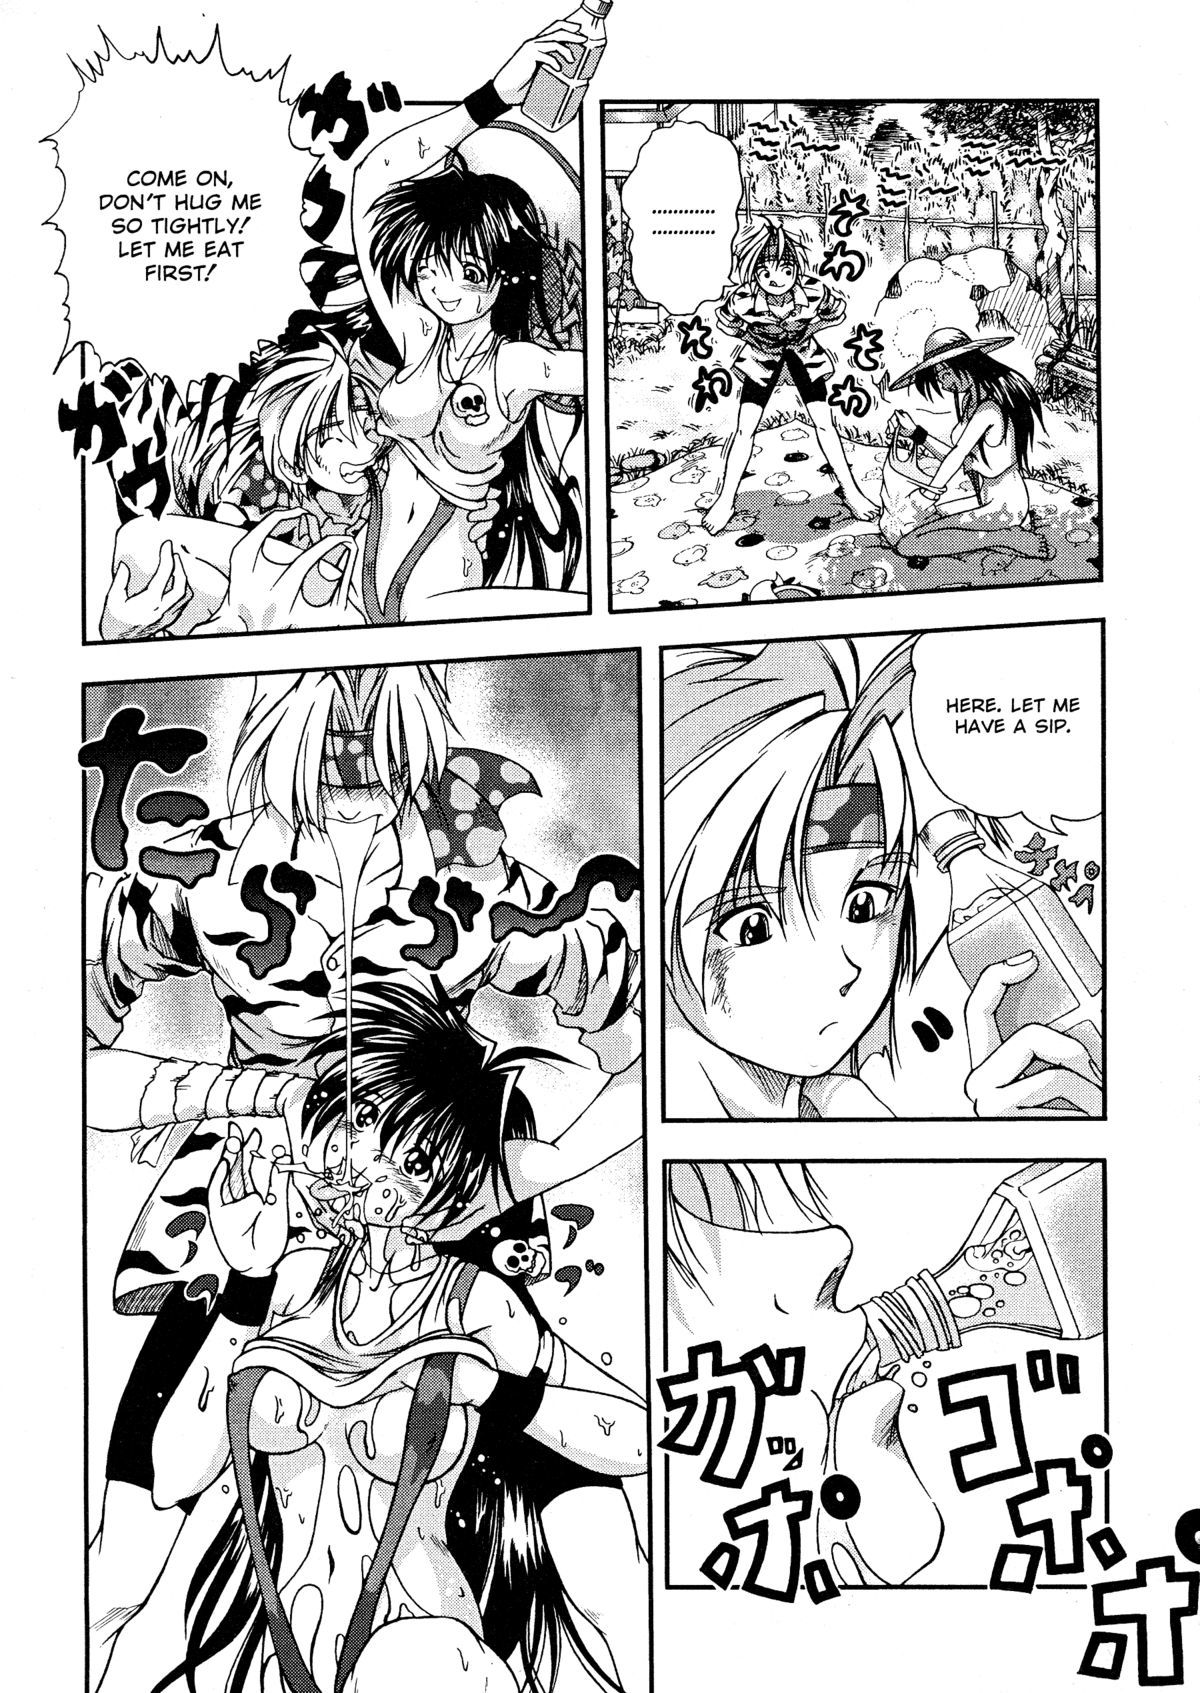 Flashbang!Hi-res 151 hentai manga